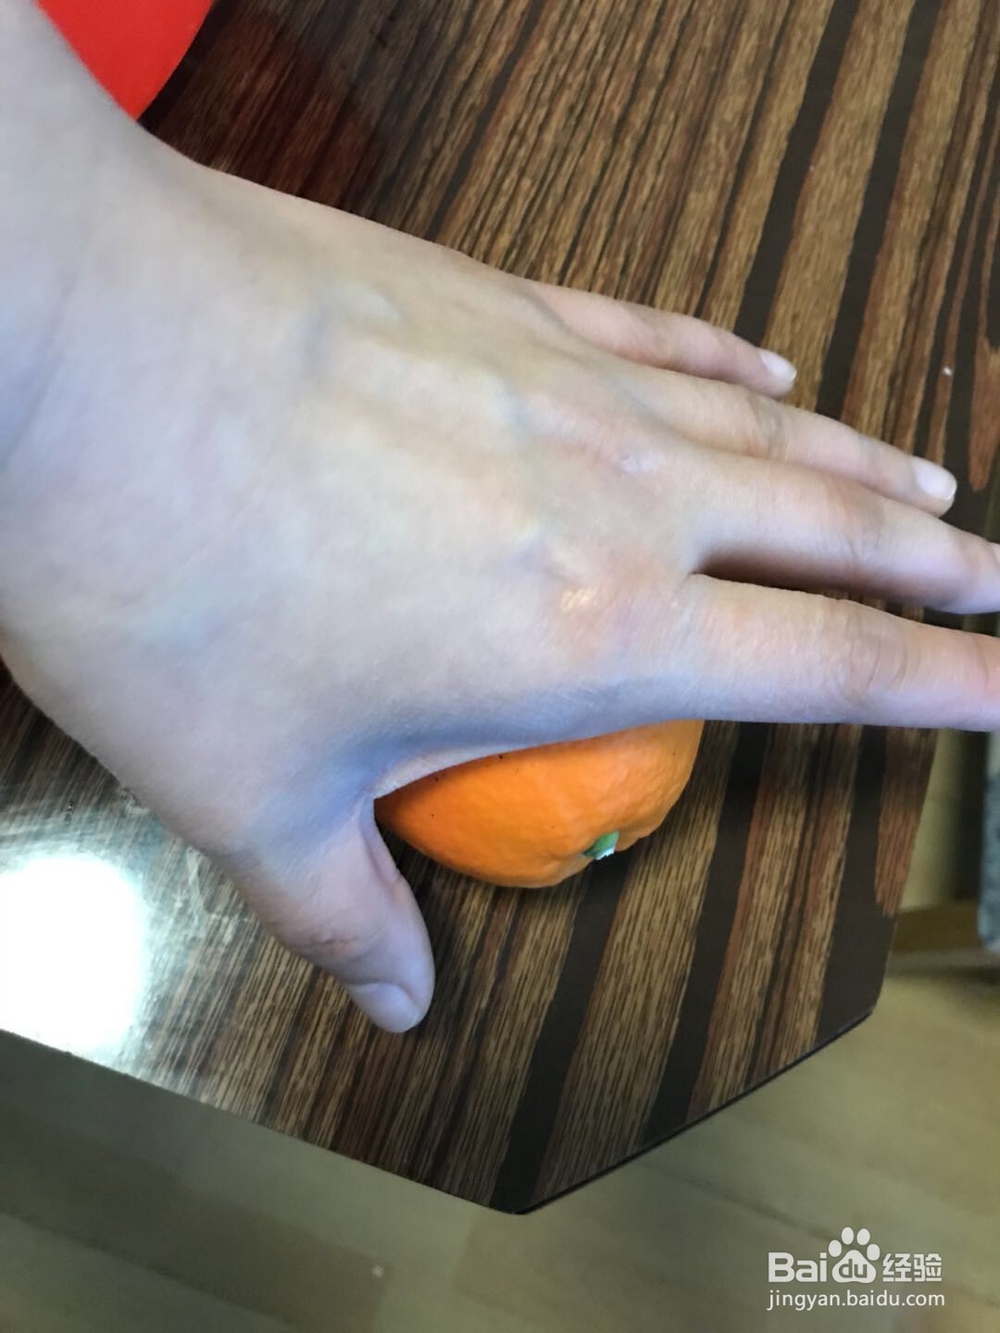 <b>用勺子剥出完整橙子的方法</b>